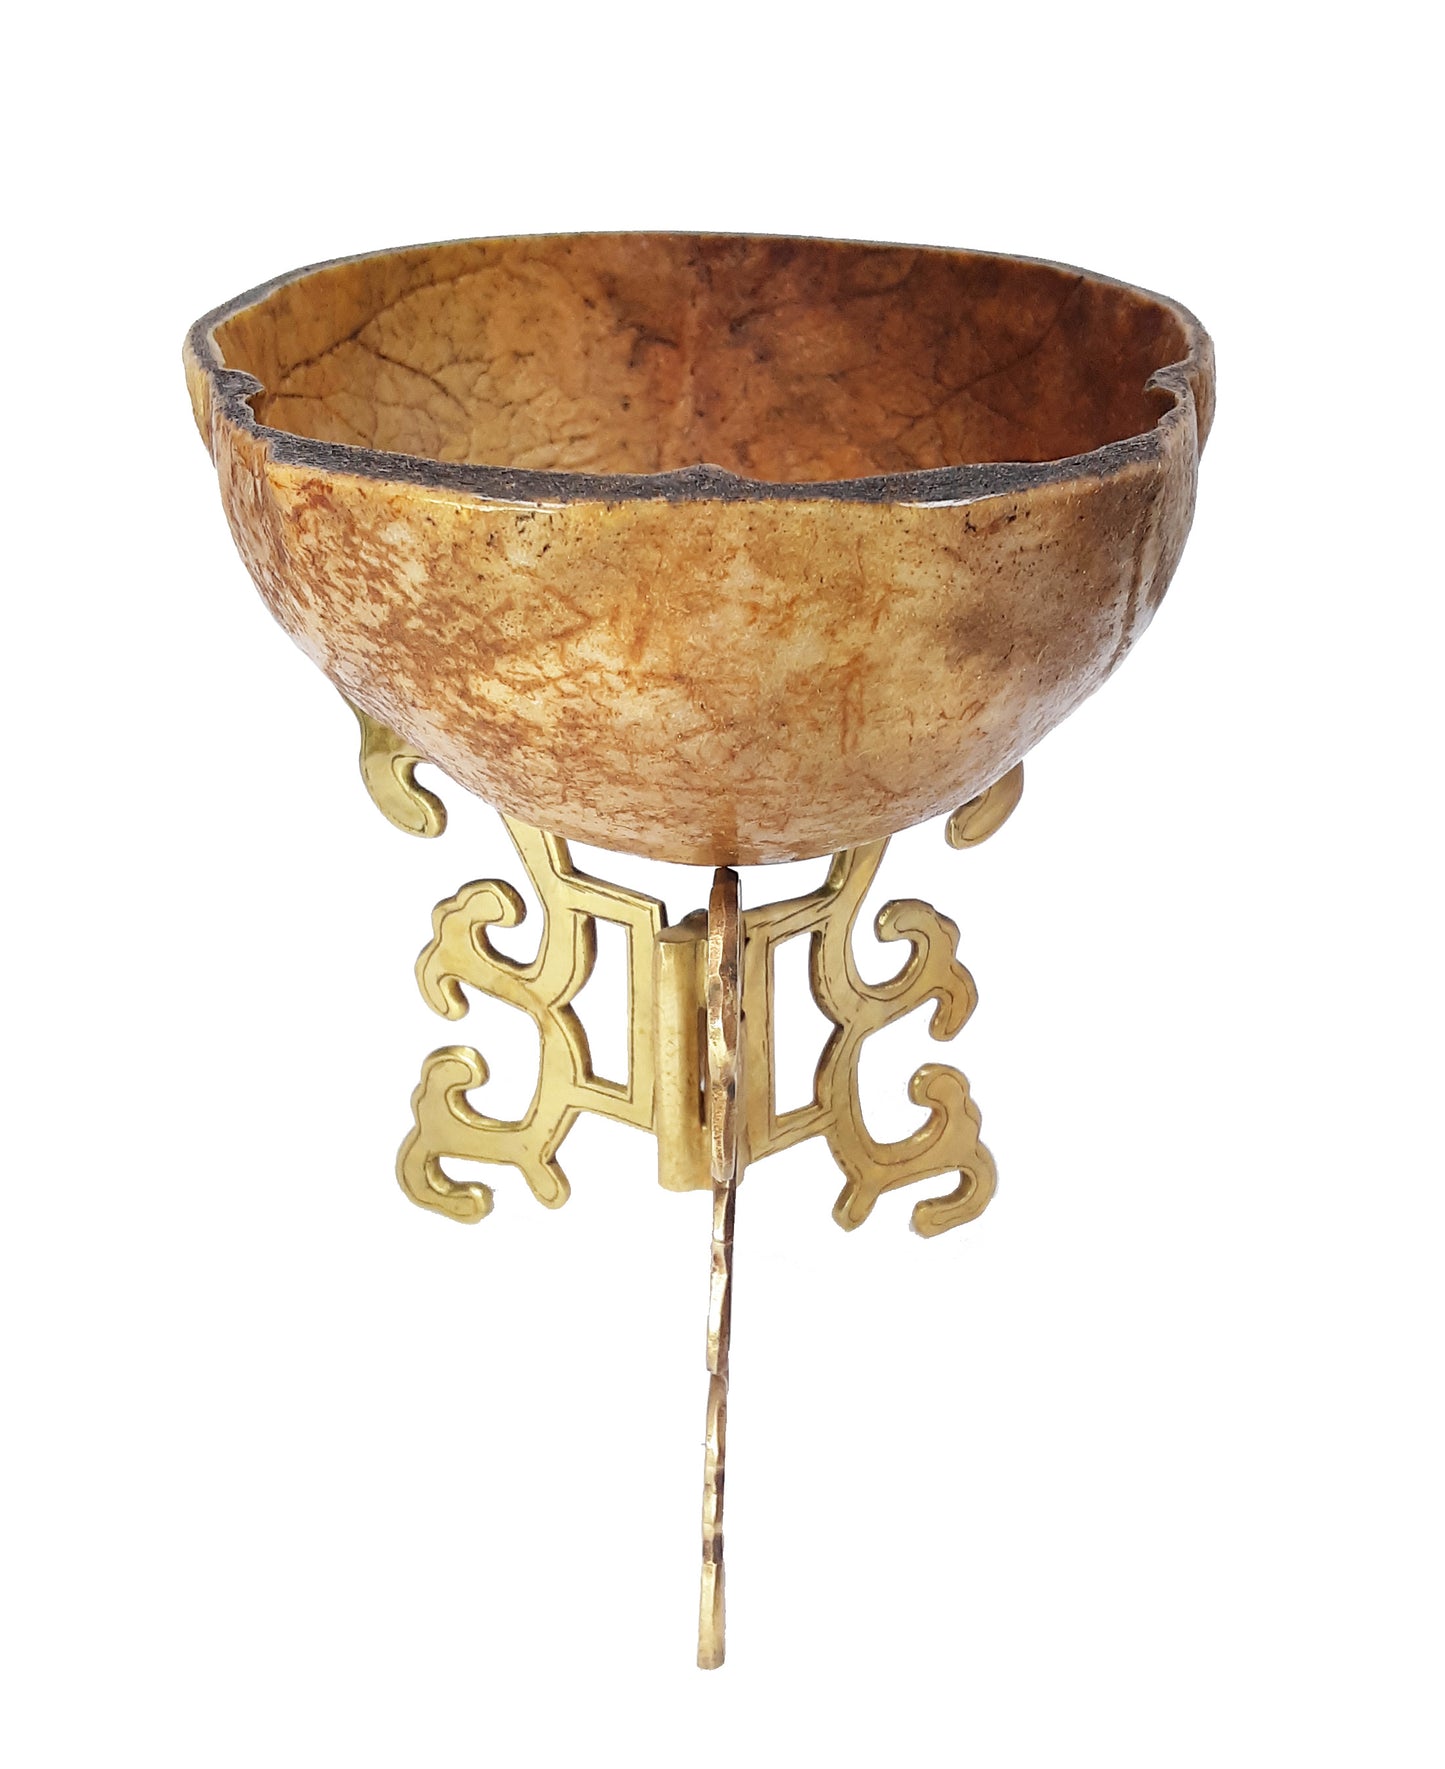 Kapala, Authentic Human Skull Cup